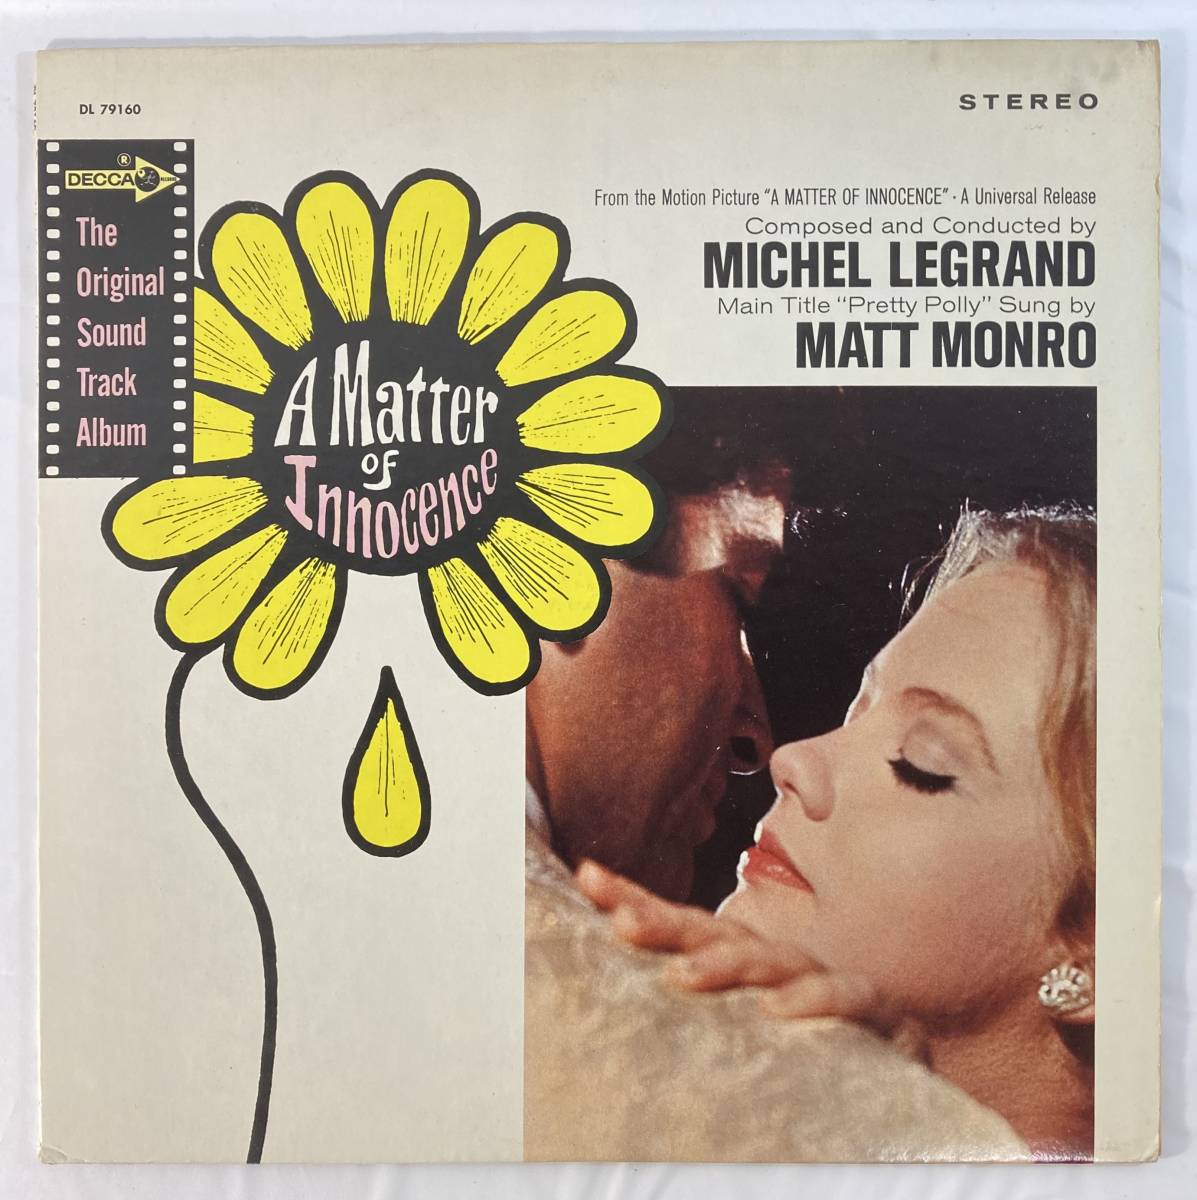 A Matter of Innocence (1967) Michel * legrand rice record LP DECCA DL 79160 STEREO